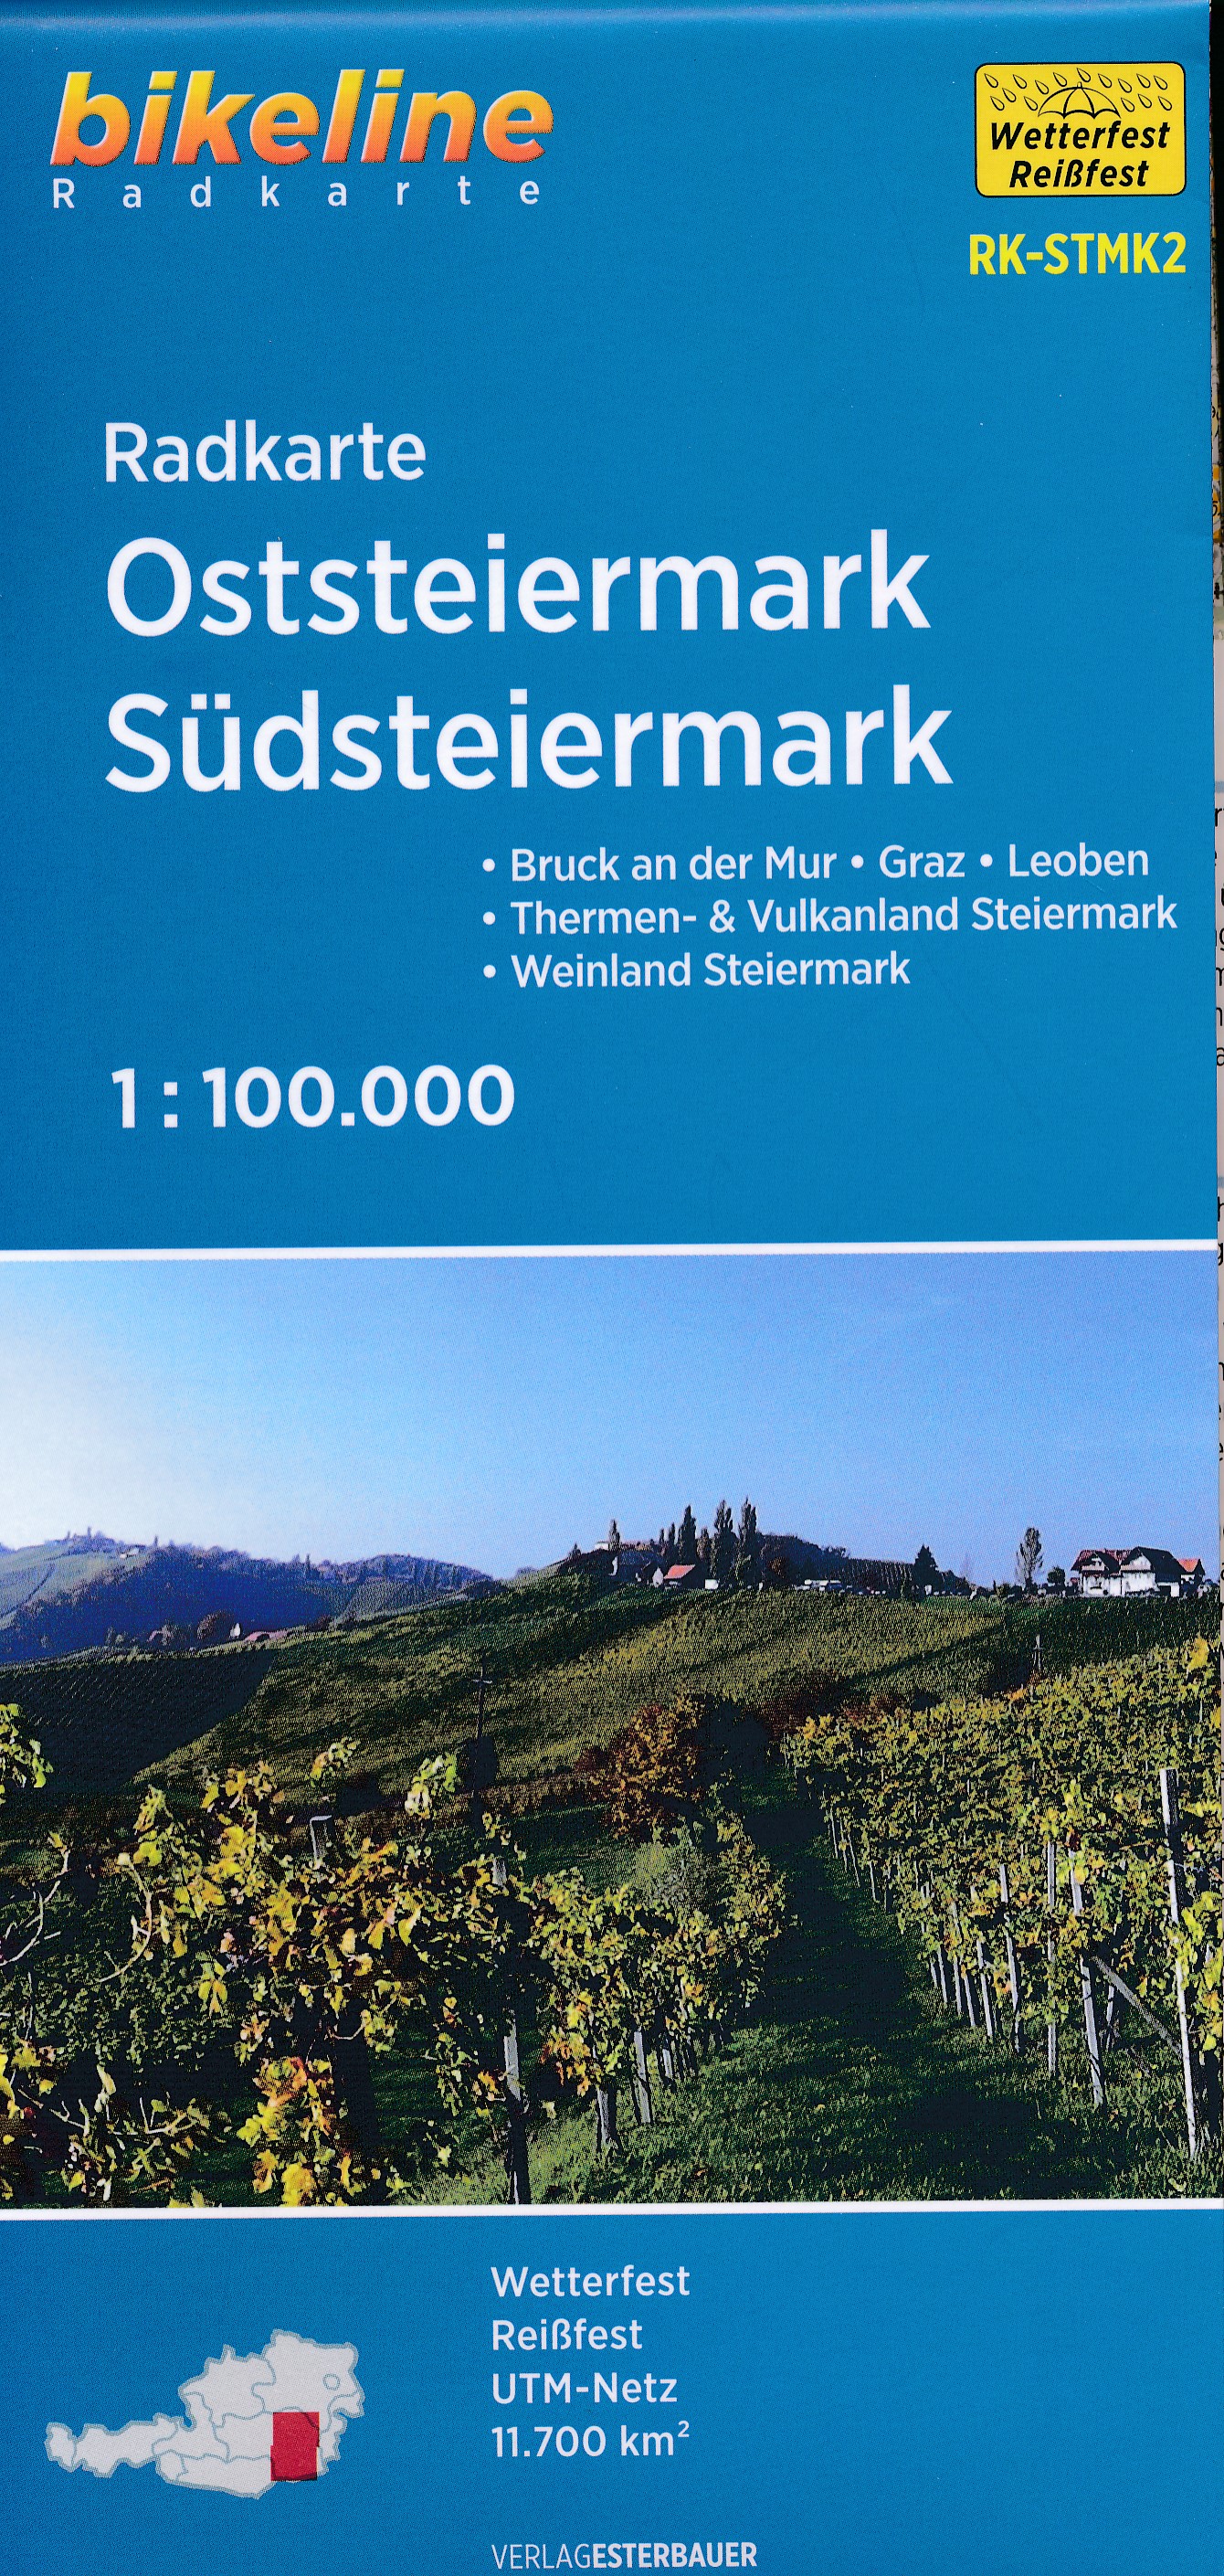 Online bestellen: Fietskaart RK-STMK2 Bikeline Radkarte Oststeiermark - Südsteiermark | Esterbauer